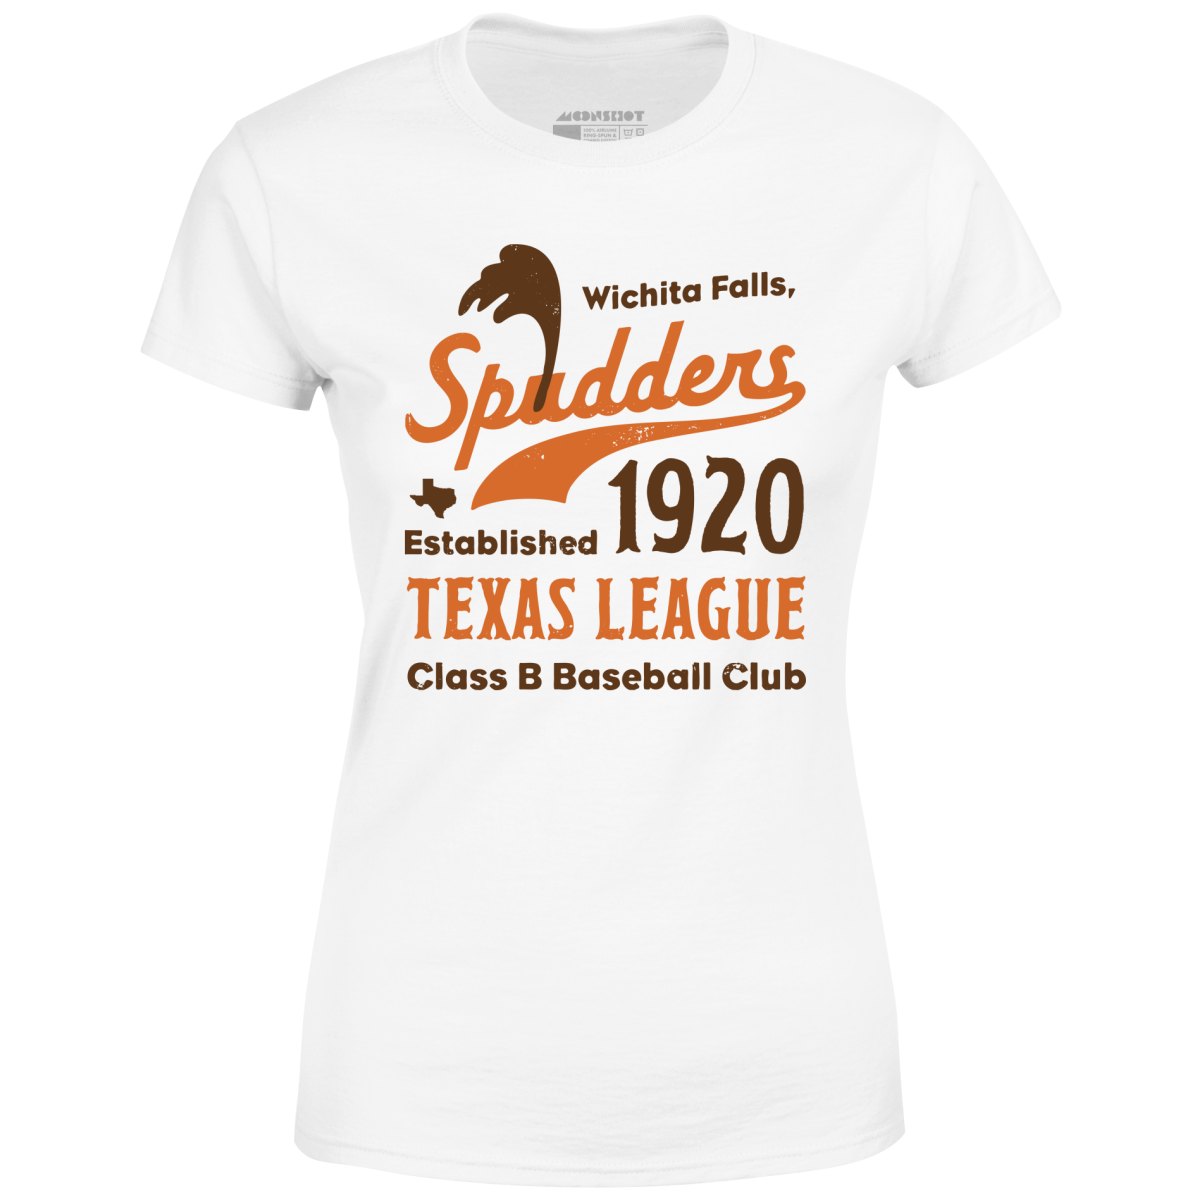 Wichita Falls Spudders - Texas - Vintage Defunct Baseball Teams - Women's T-Shirt